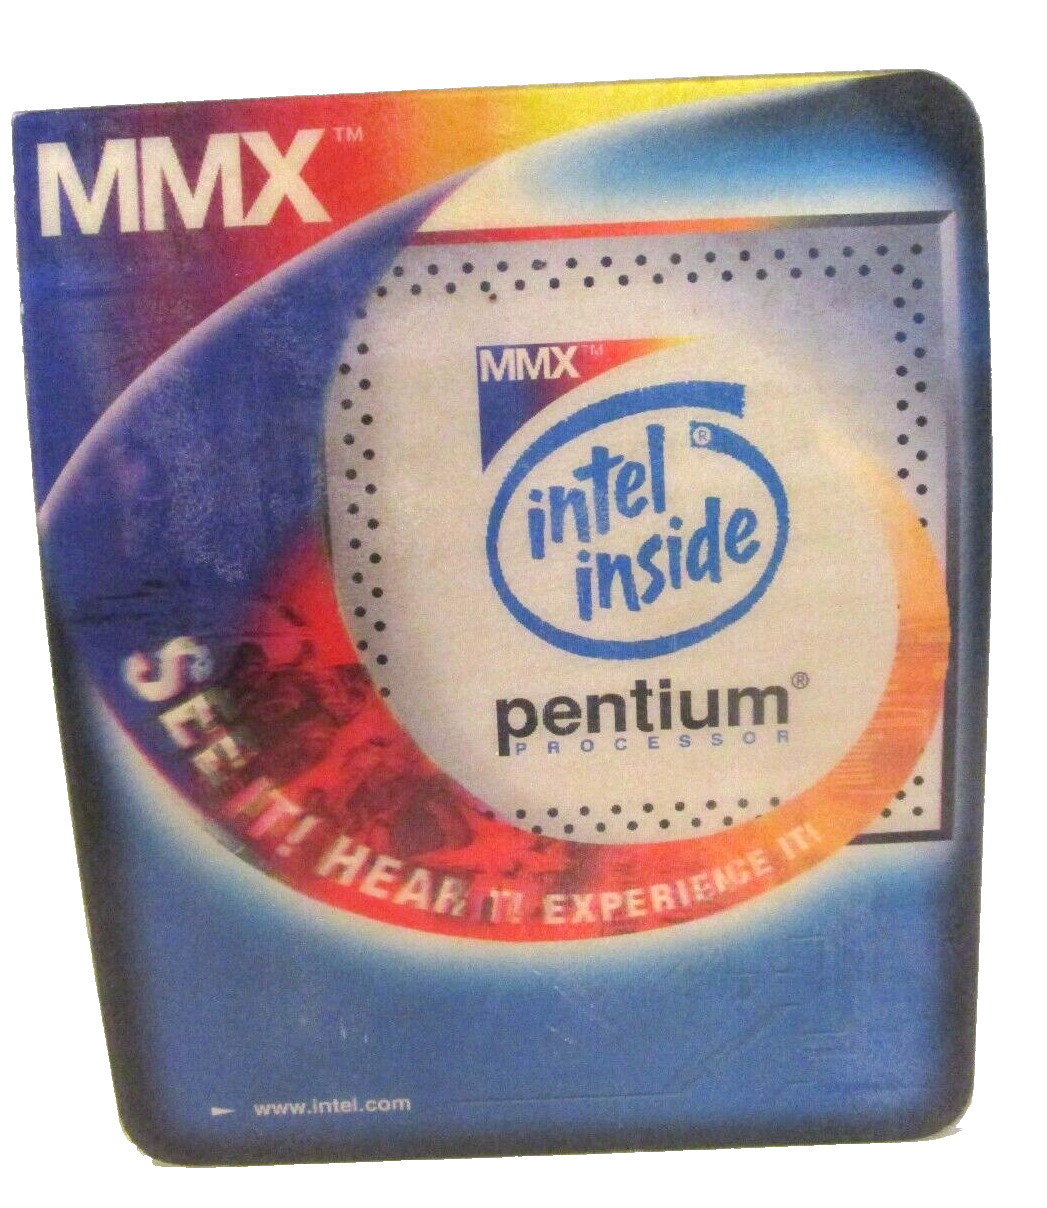 Vintage 1993 Intel Pentium MMX Mouse Pad See it Hear it Experience it Display